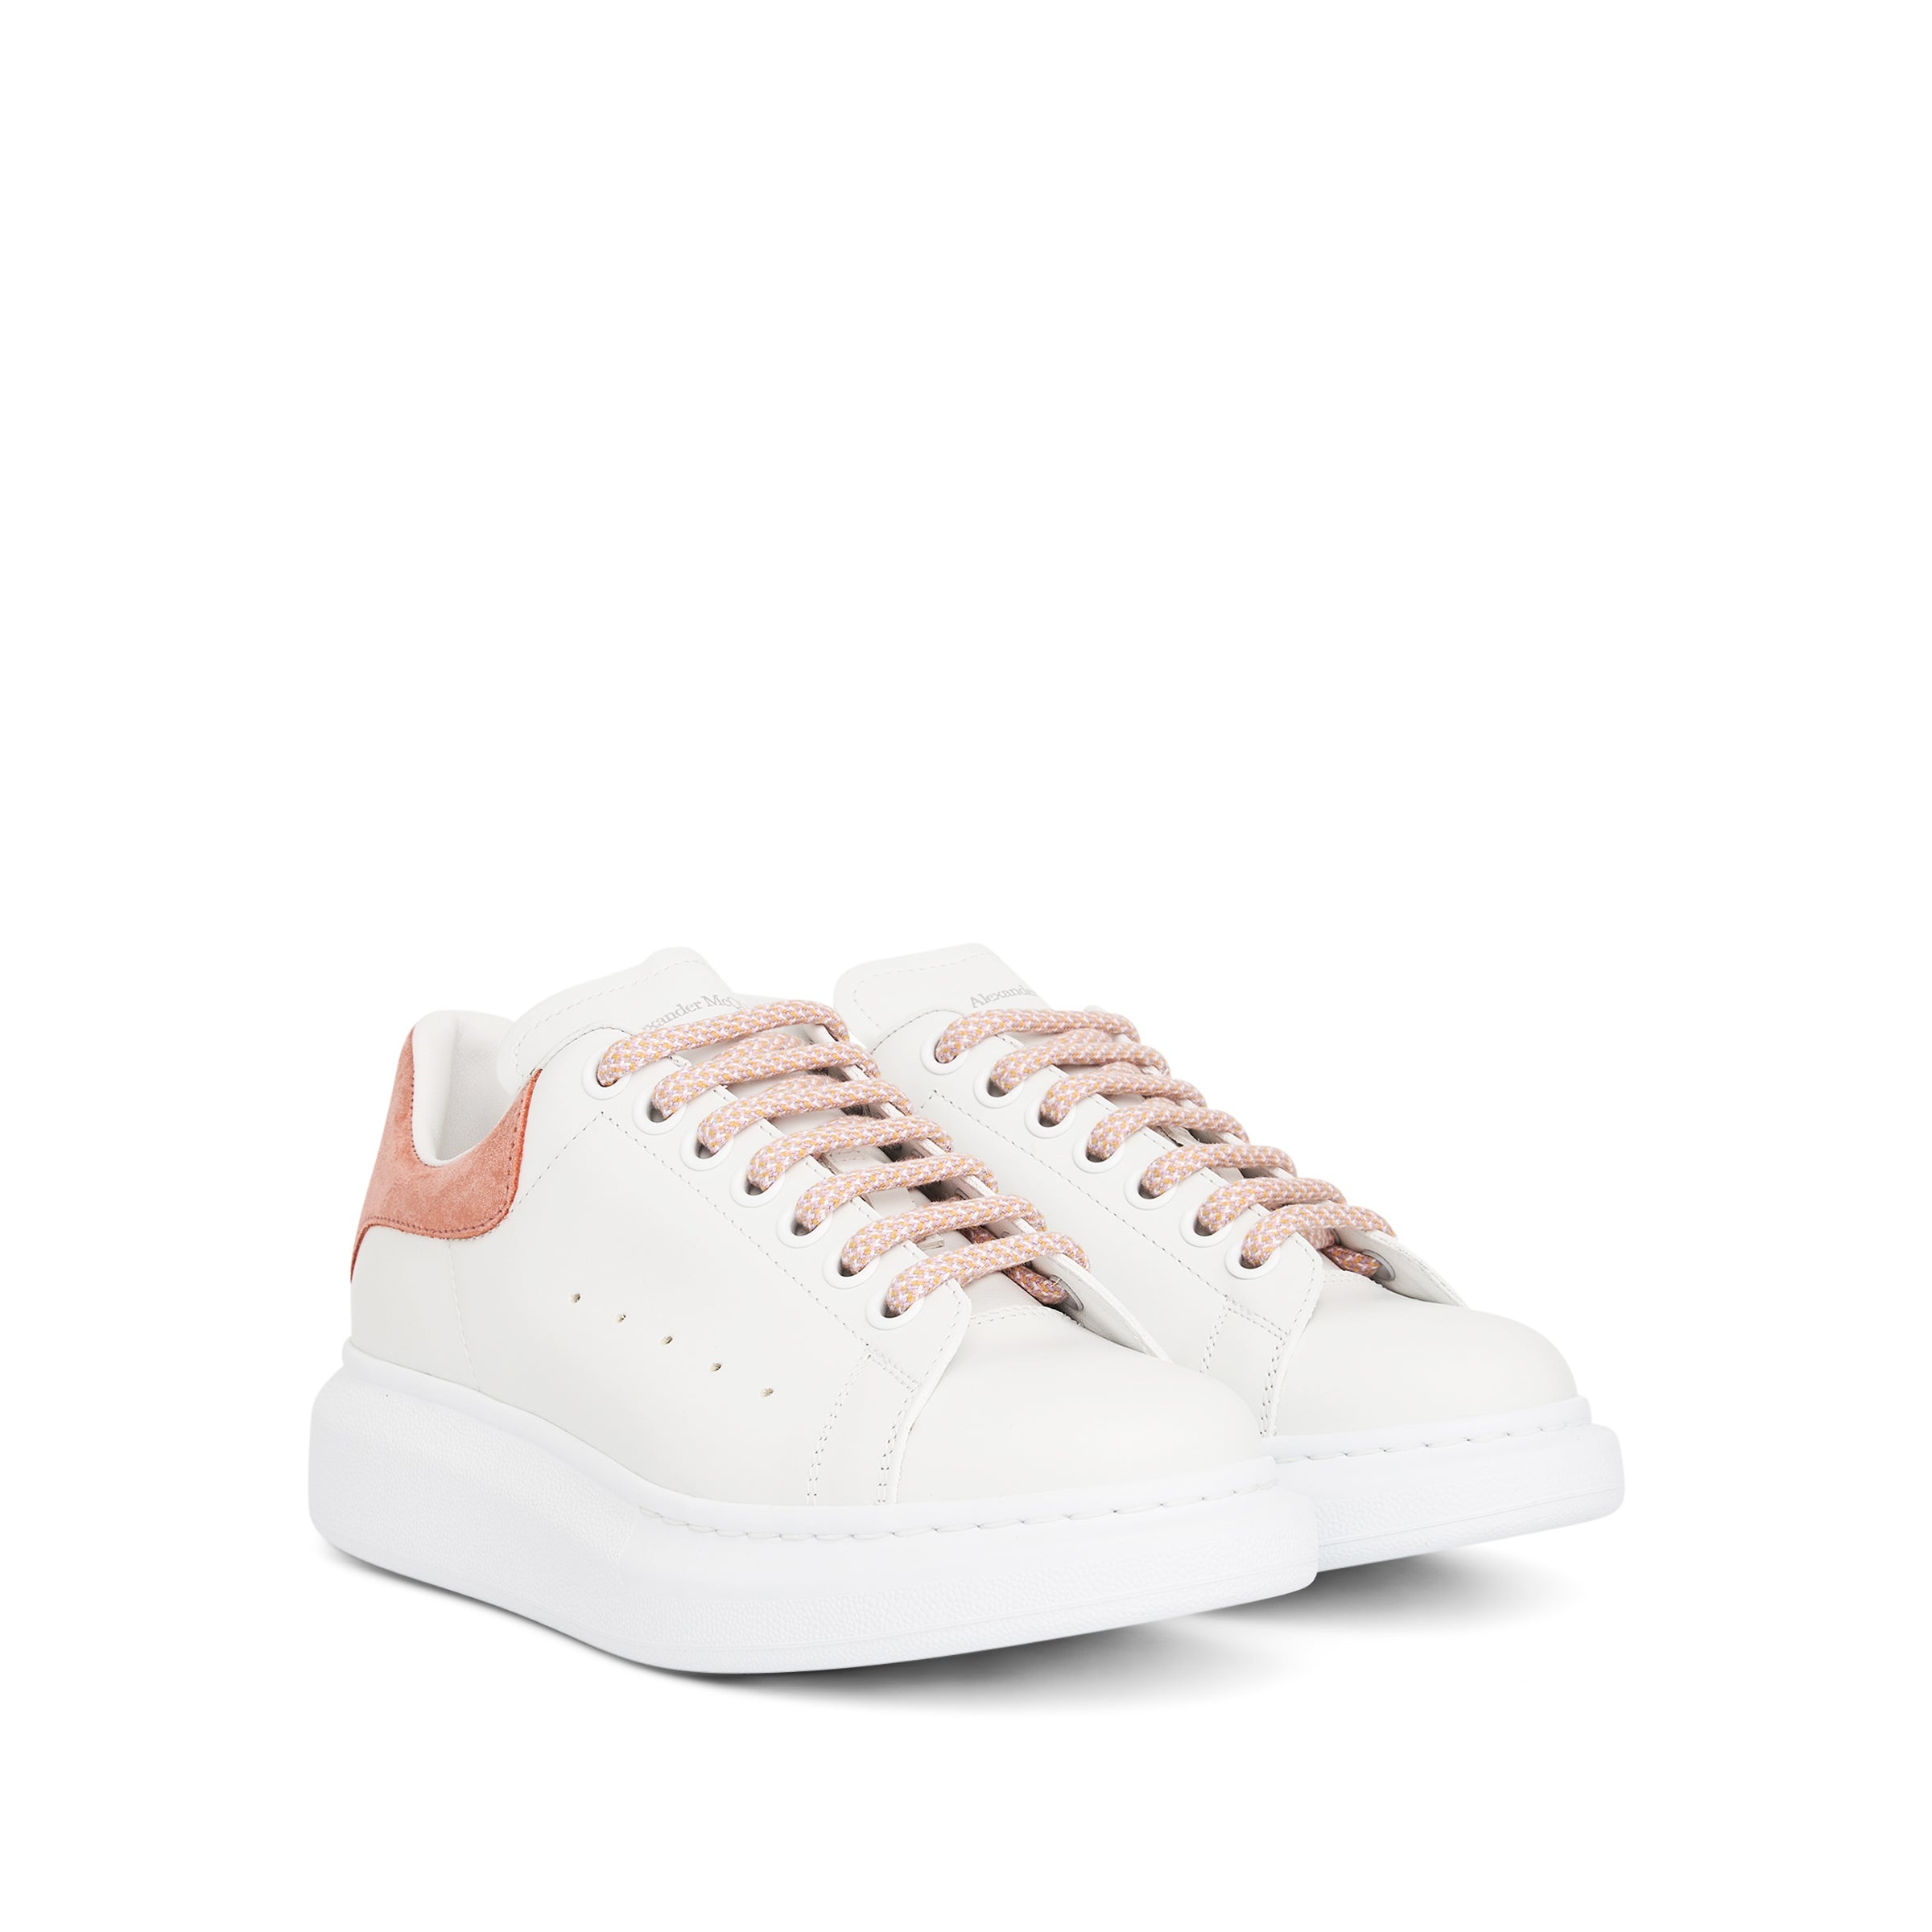 Larry Oversized Sneaker in White/Clay - 2